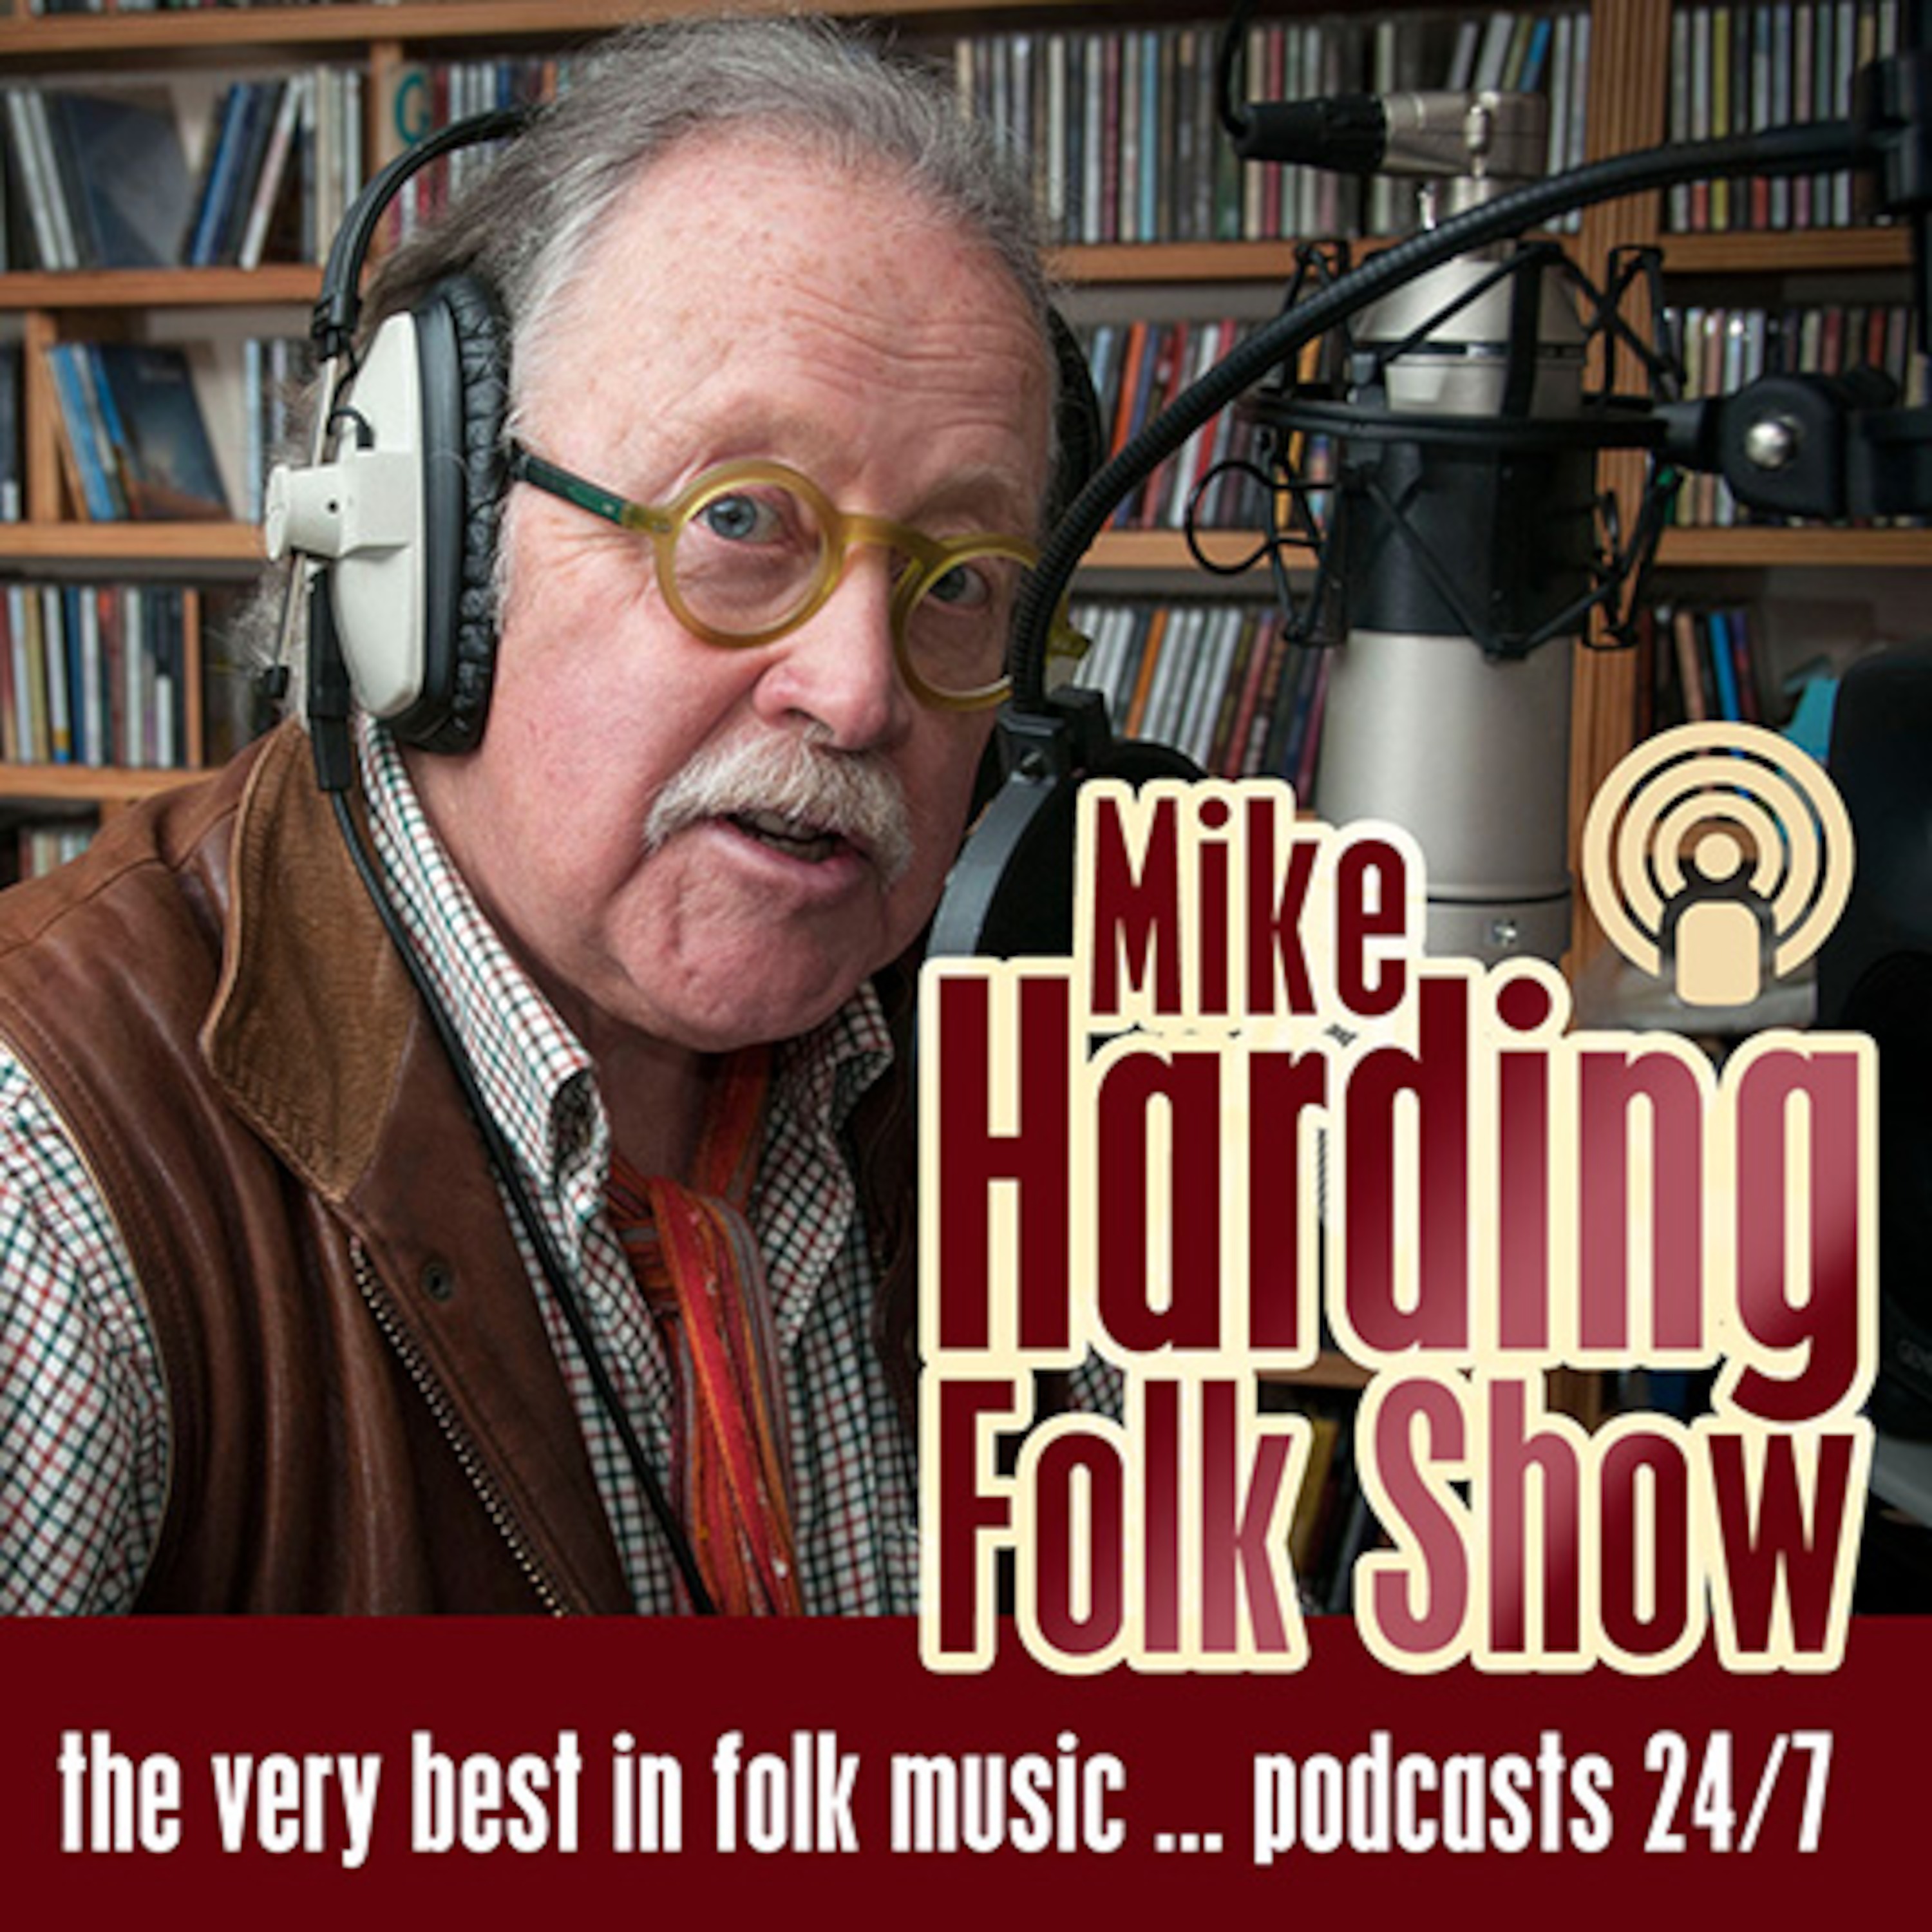 Mike Harding Folk Show 155